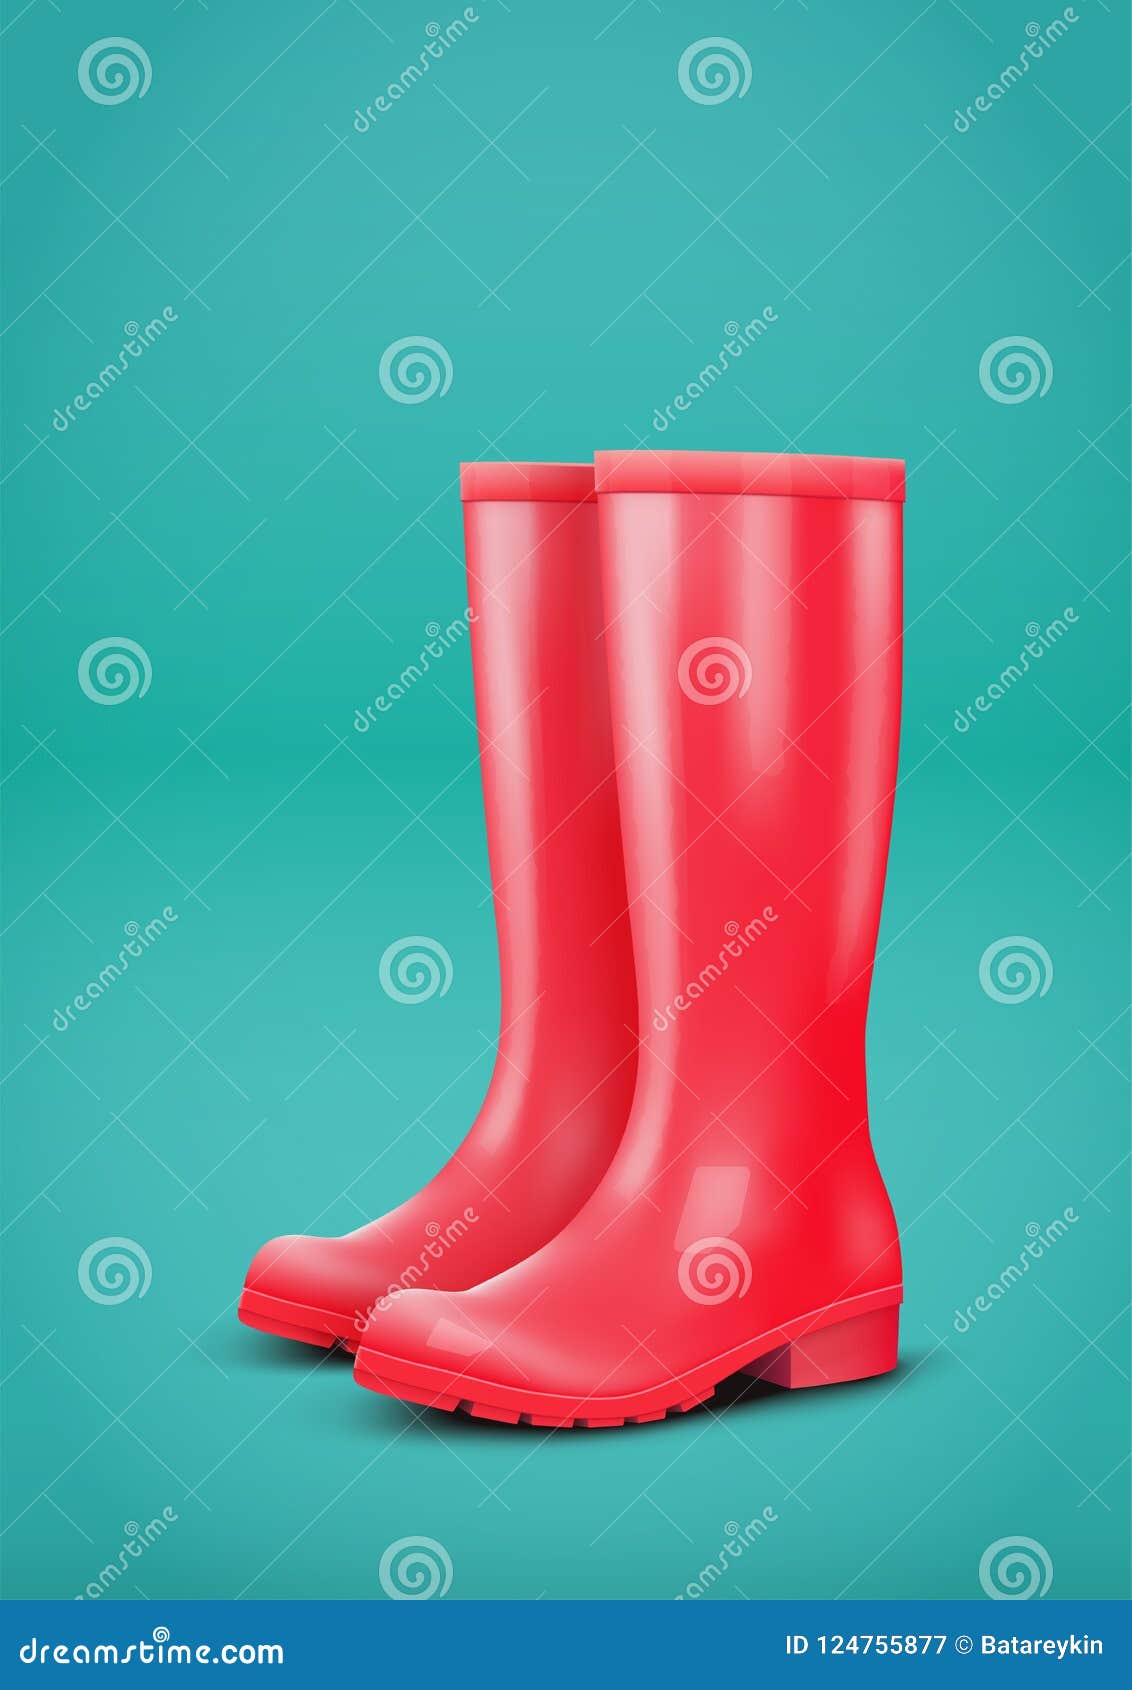 Red rain boots stock vector. Illustration of gardening - 124755877